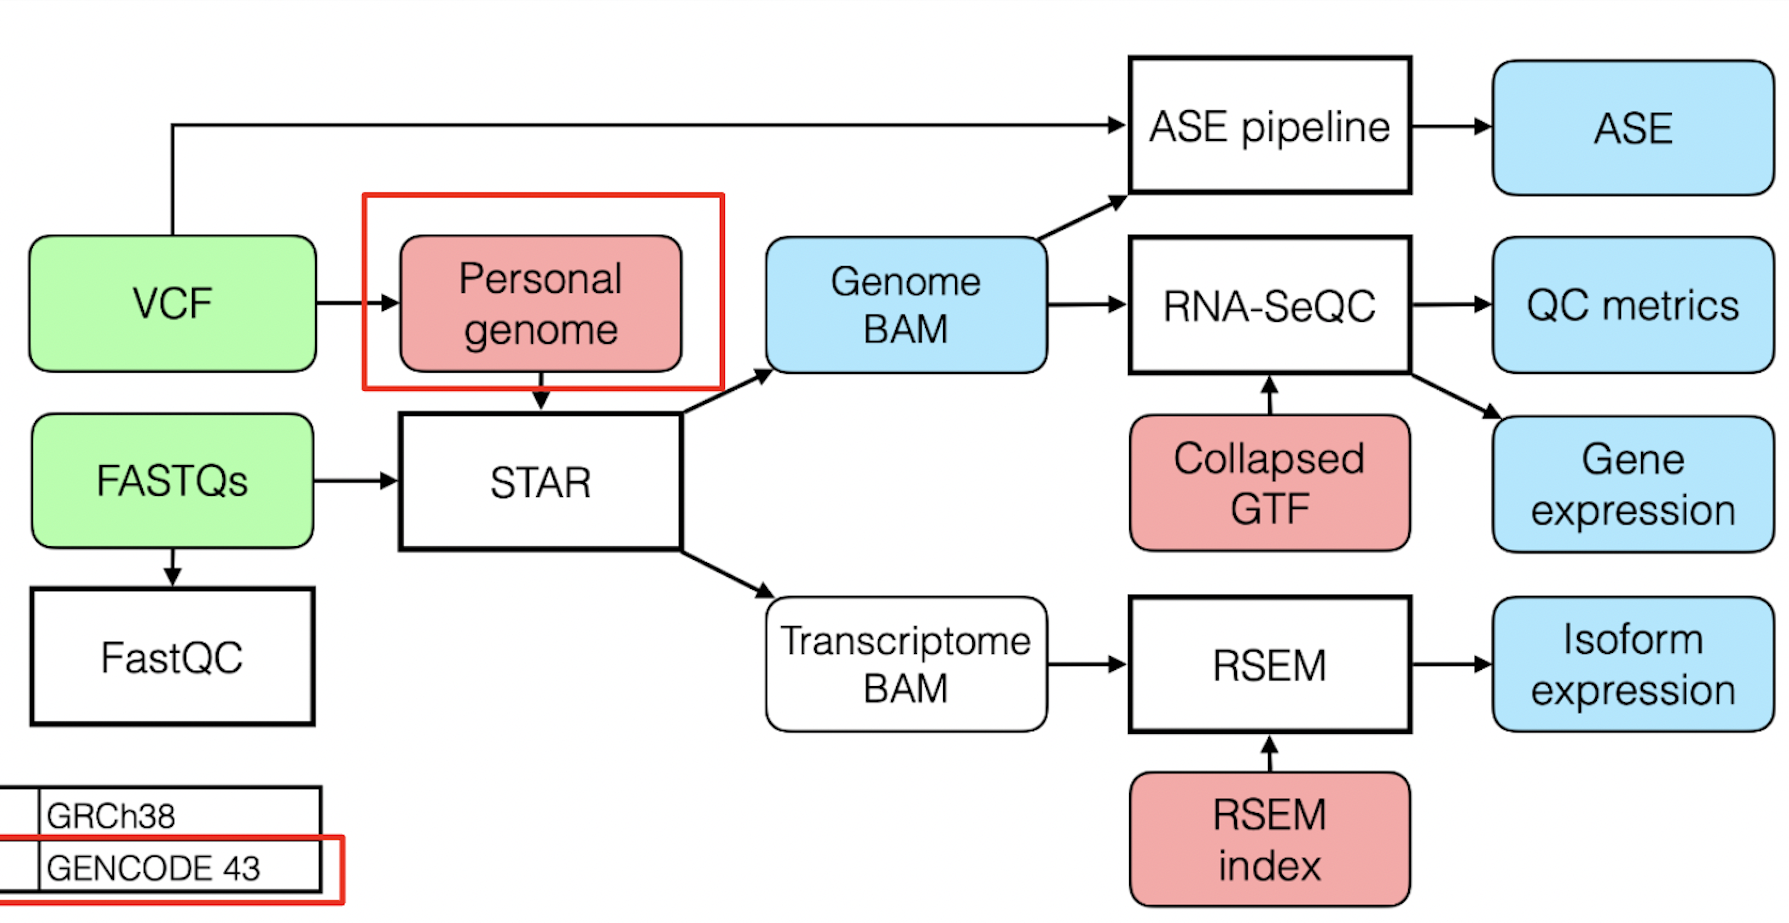 Standardized RNA-seq Pipeline for Patient Samples